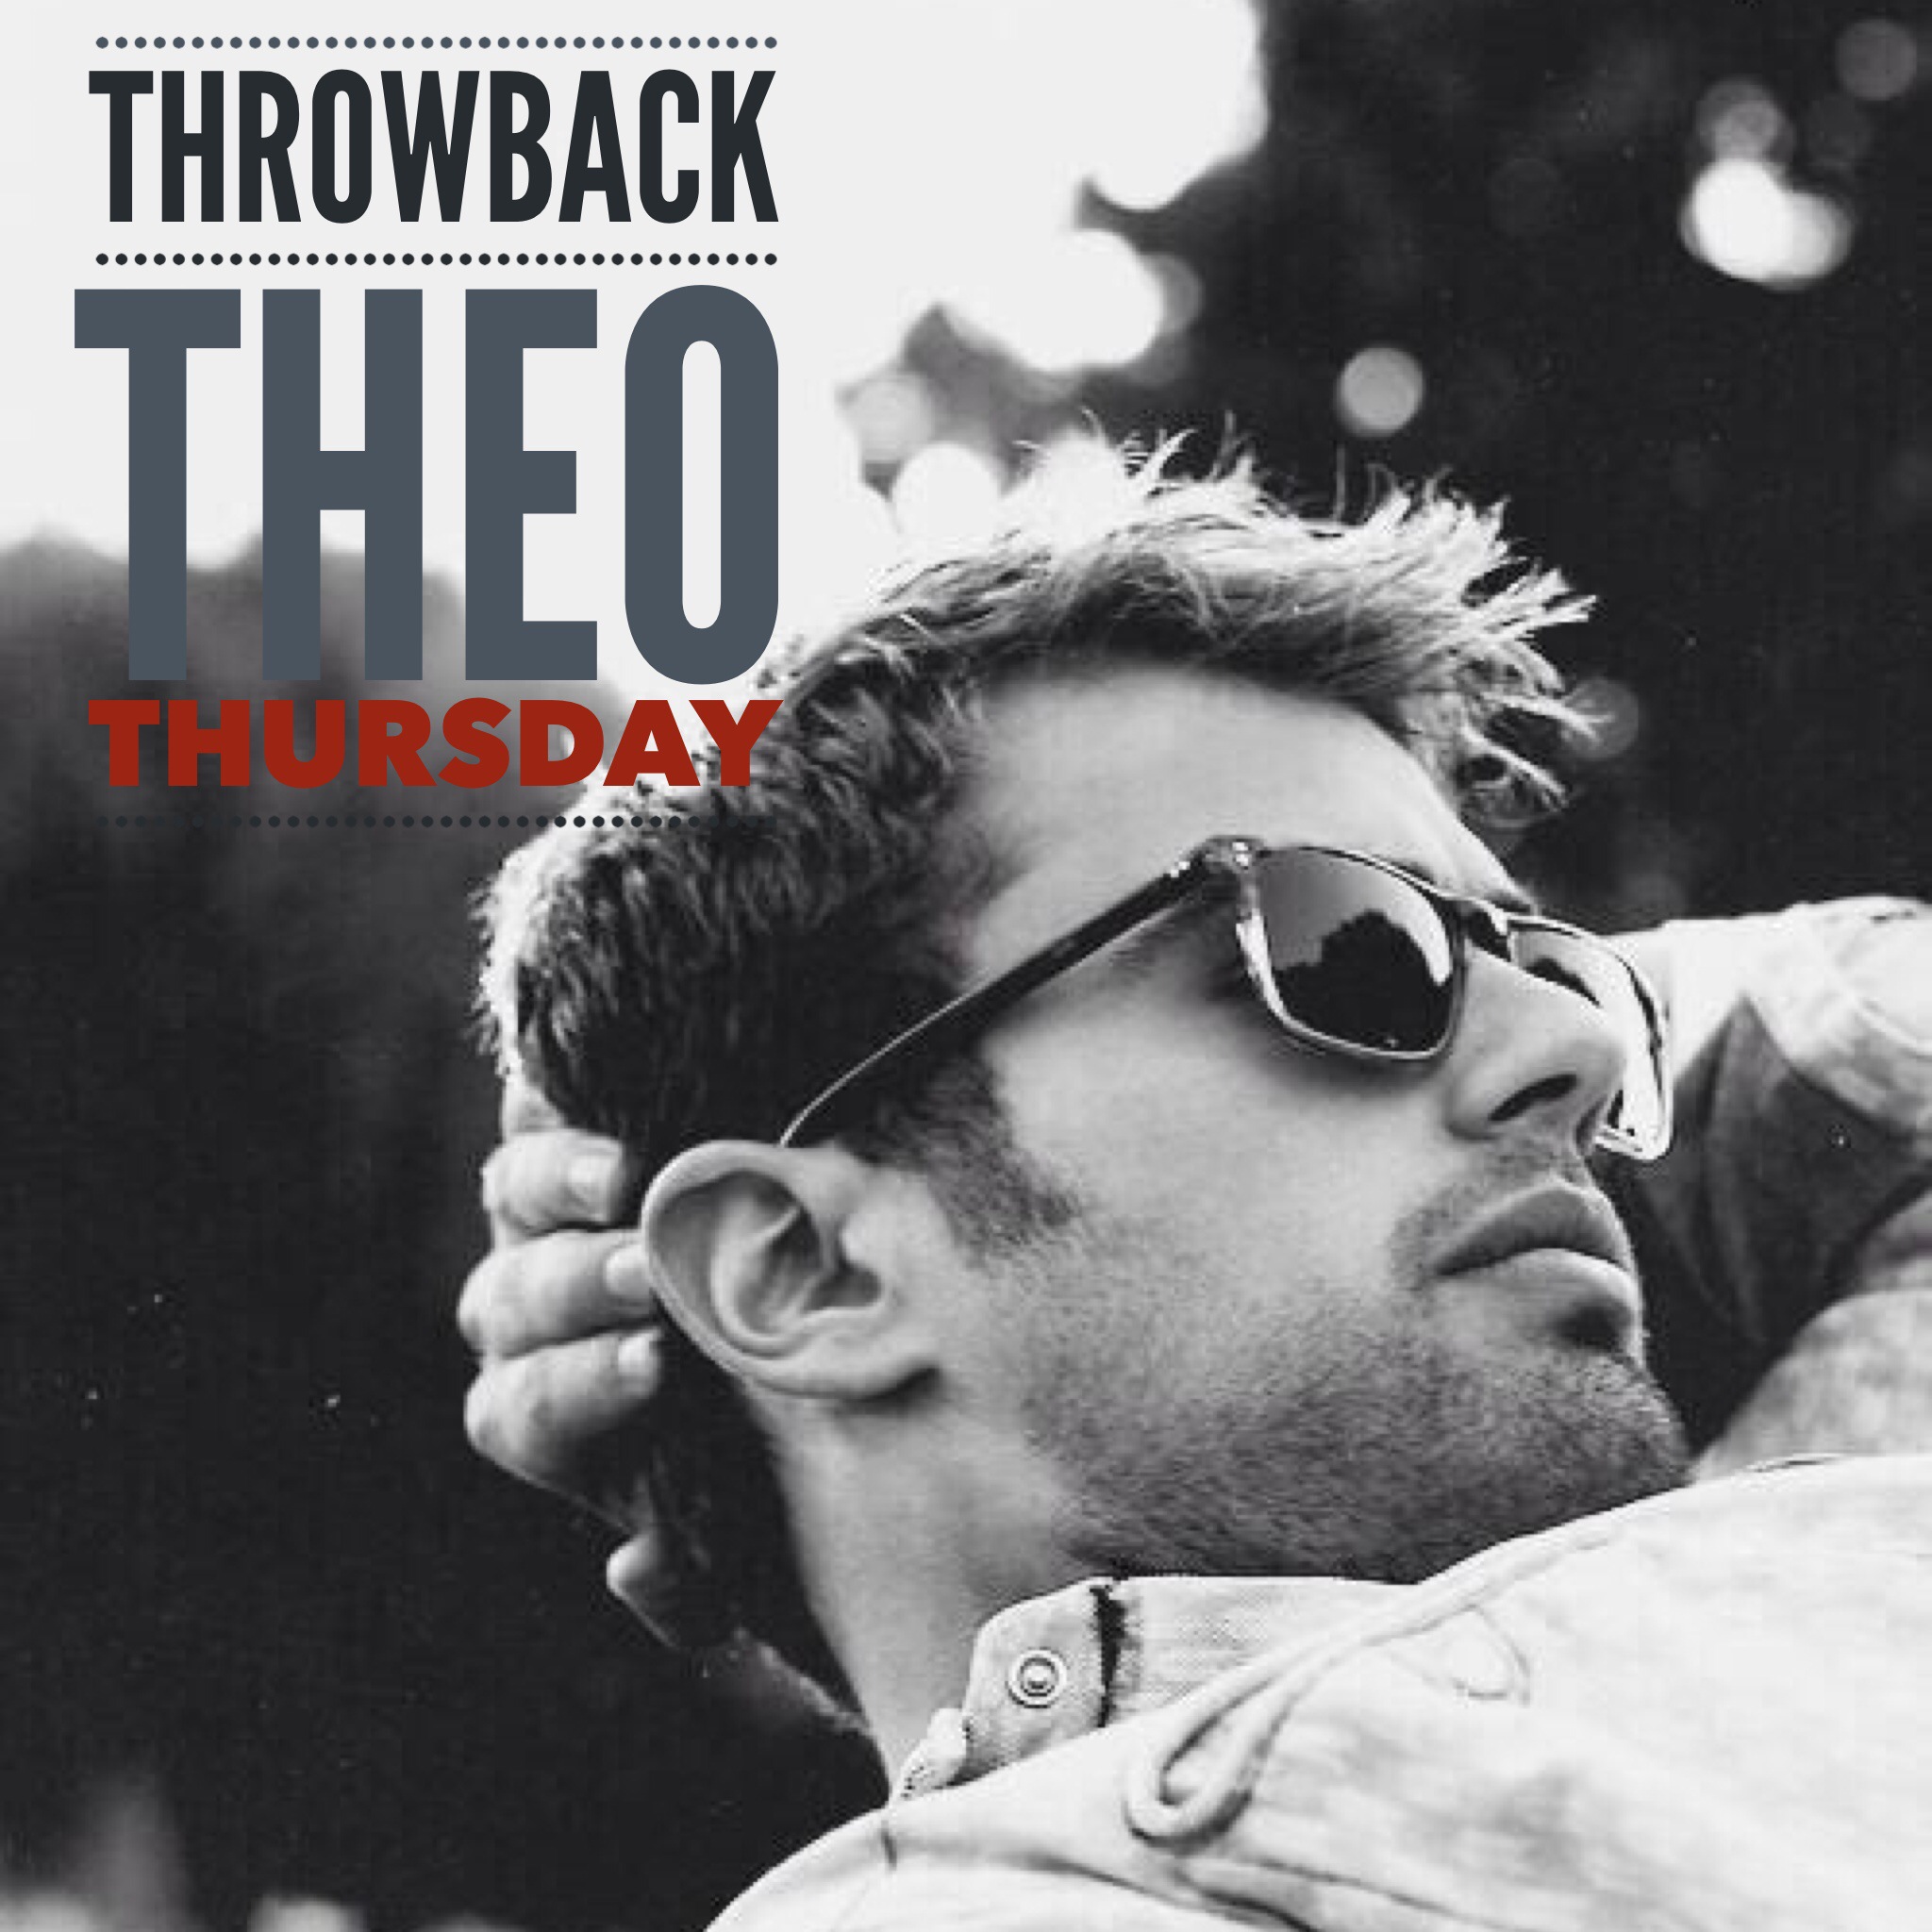 Throwback Theo Thursday: Batman Edition